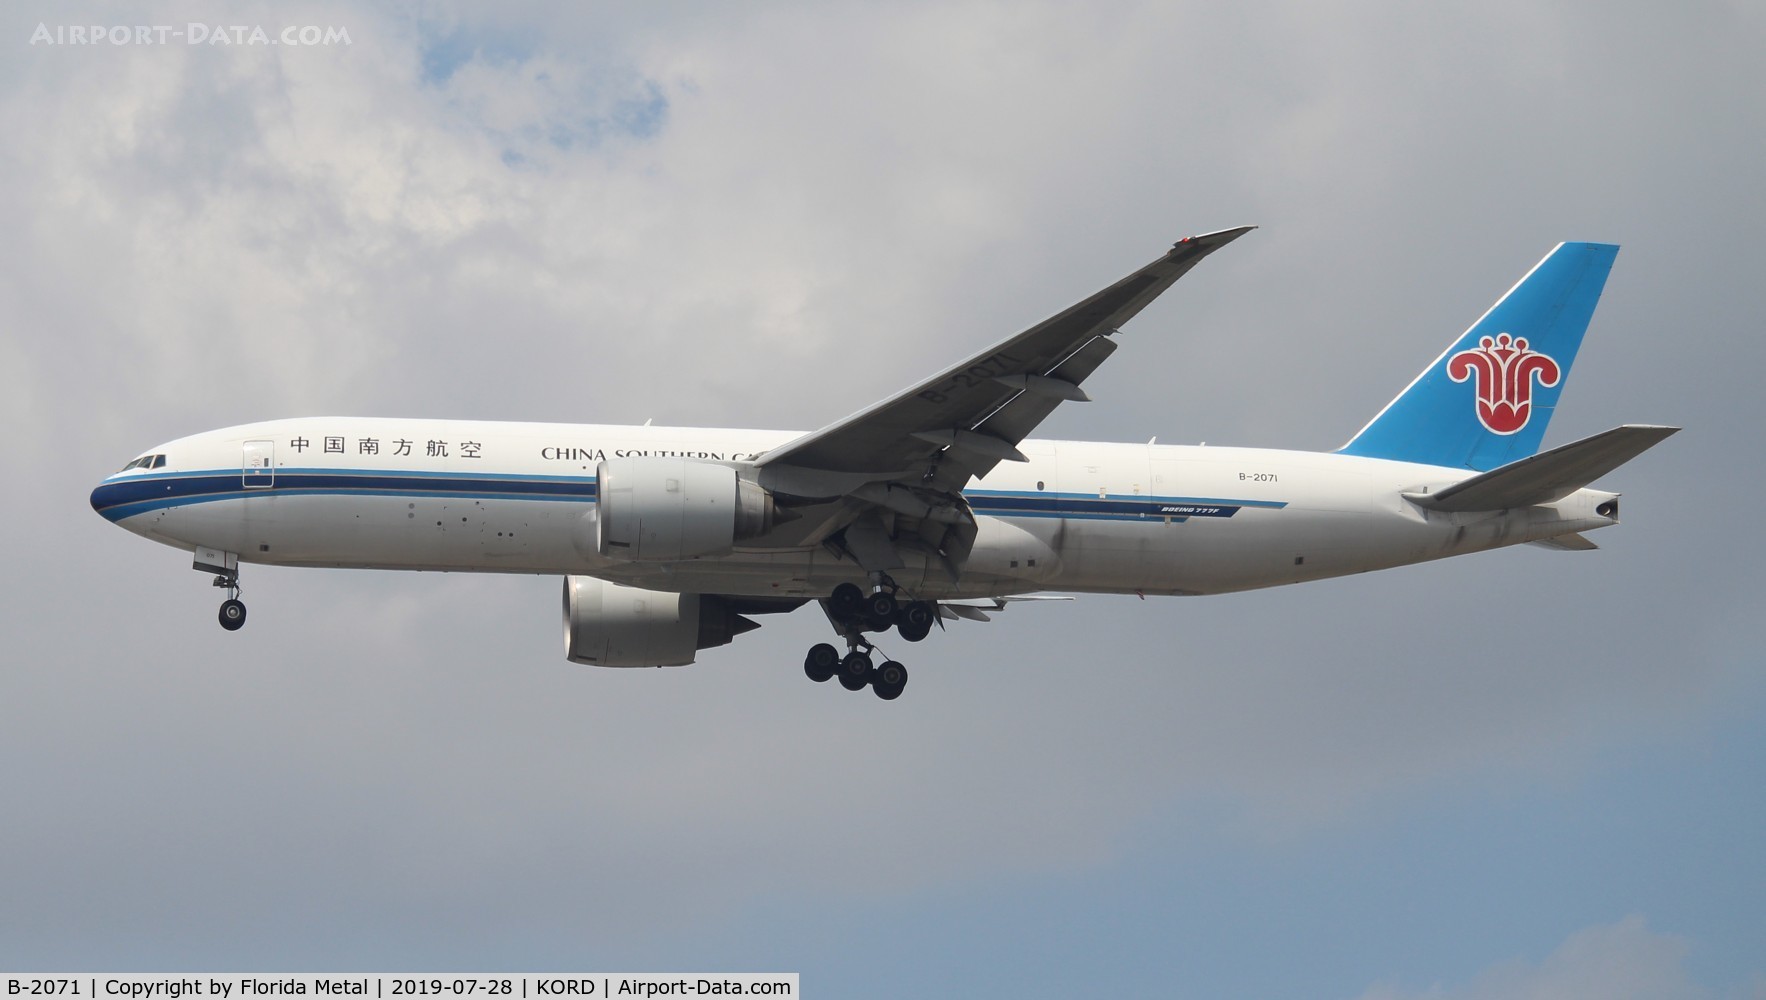 B-2071, 2009 Boeing 777-F1B C/N 37309, ORD spotting